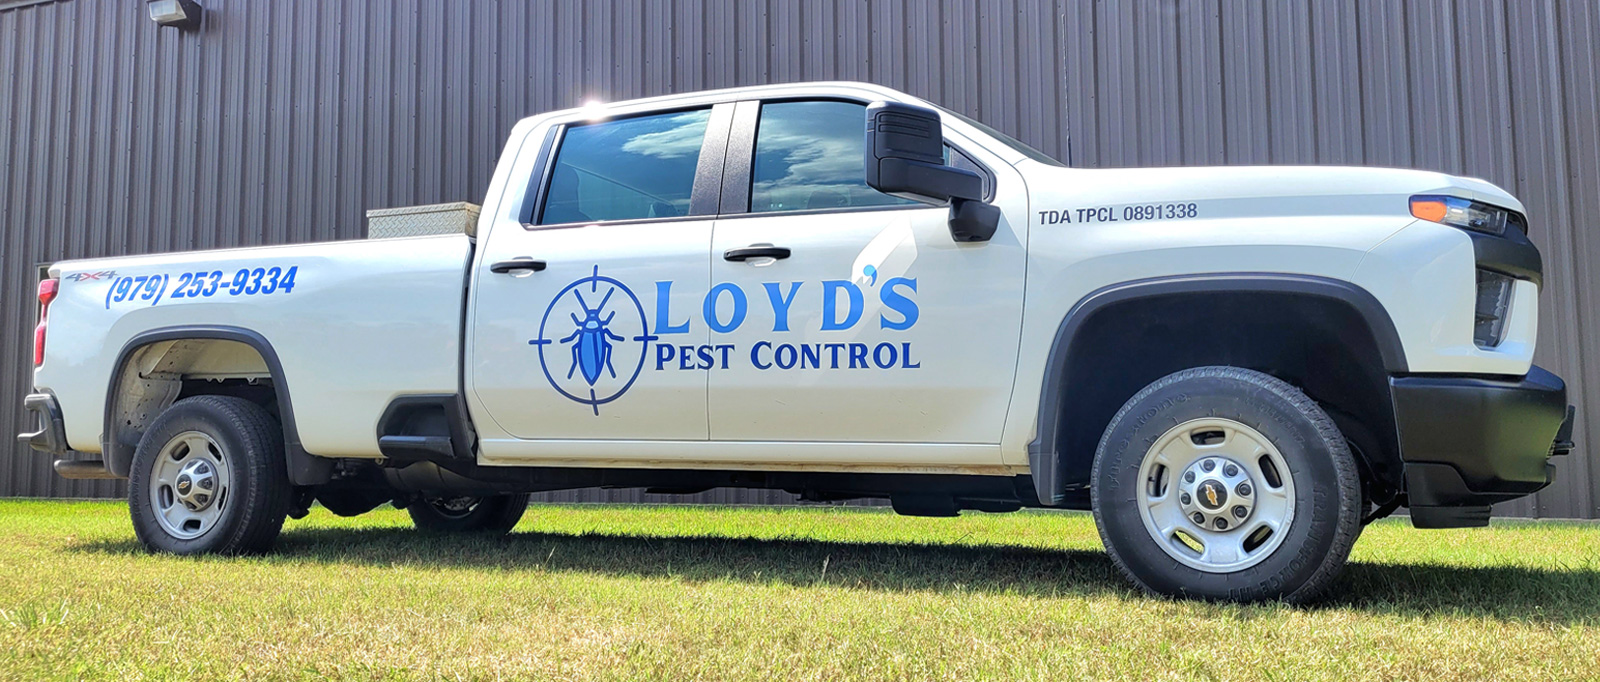 Loyd's Pest Control Truck